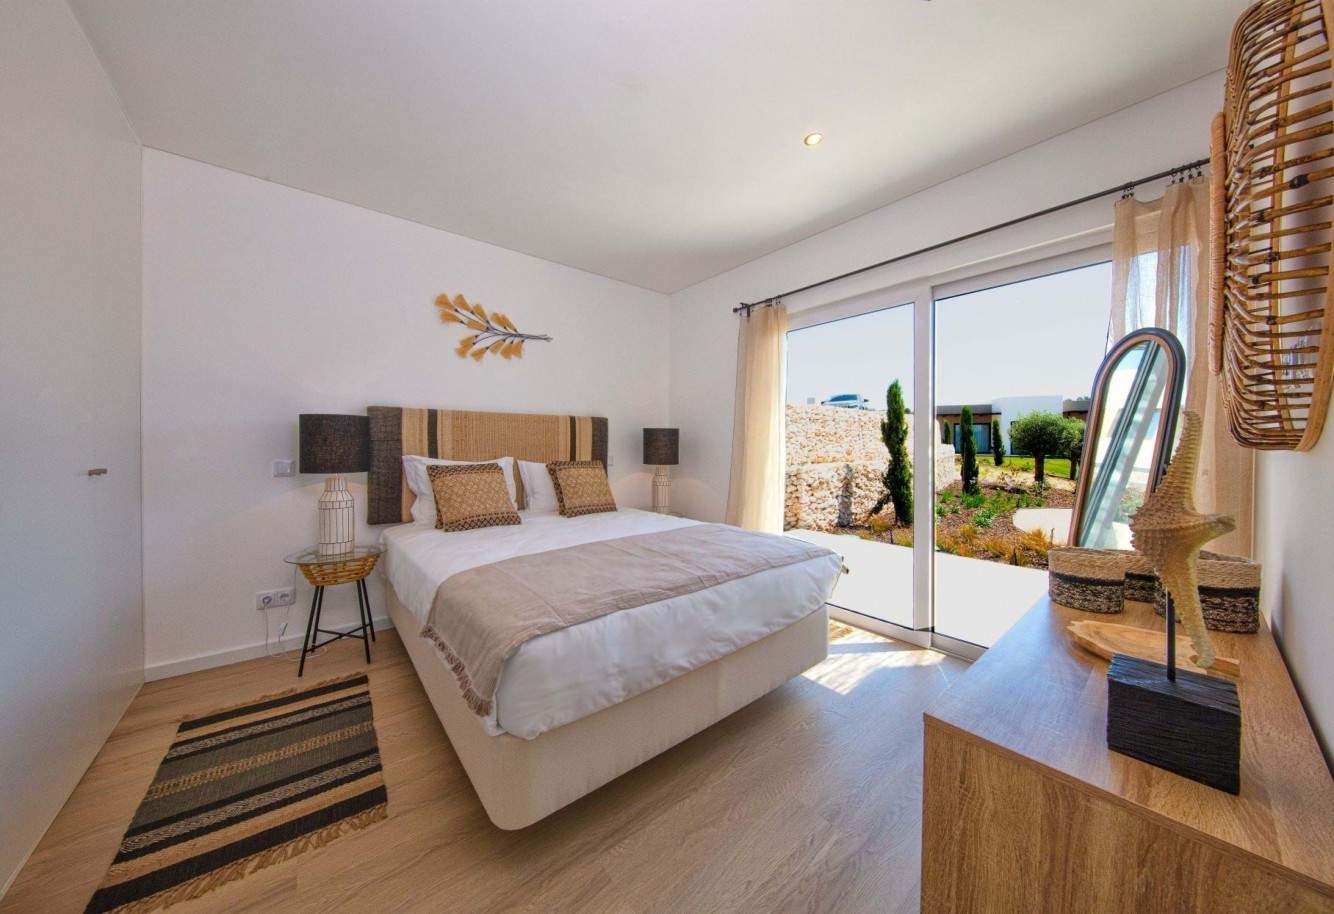 2+1 bedroom villa in resort, for sale in Carvoeiro, Algarve_204824